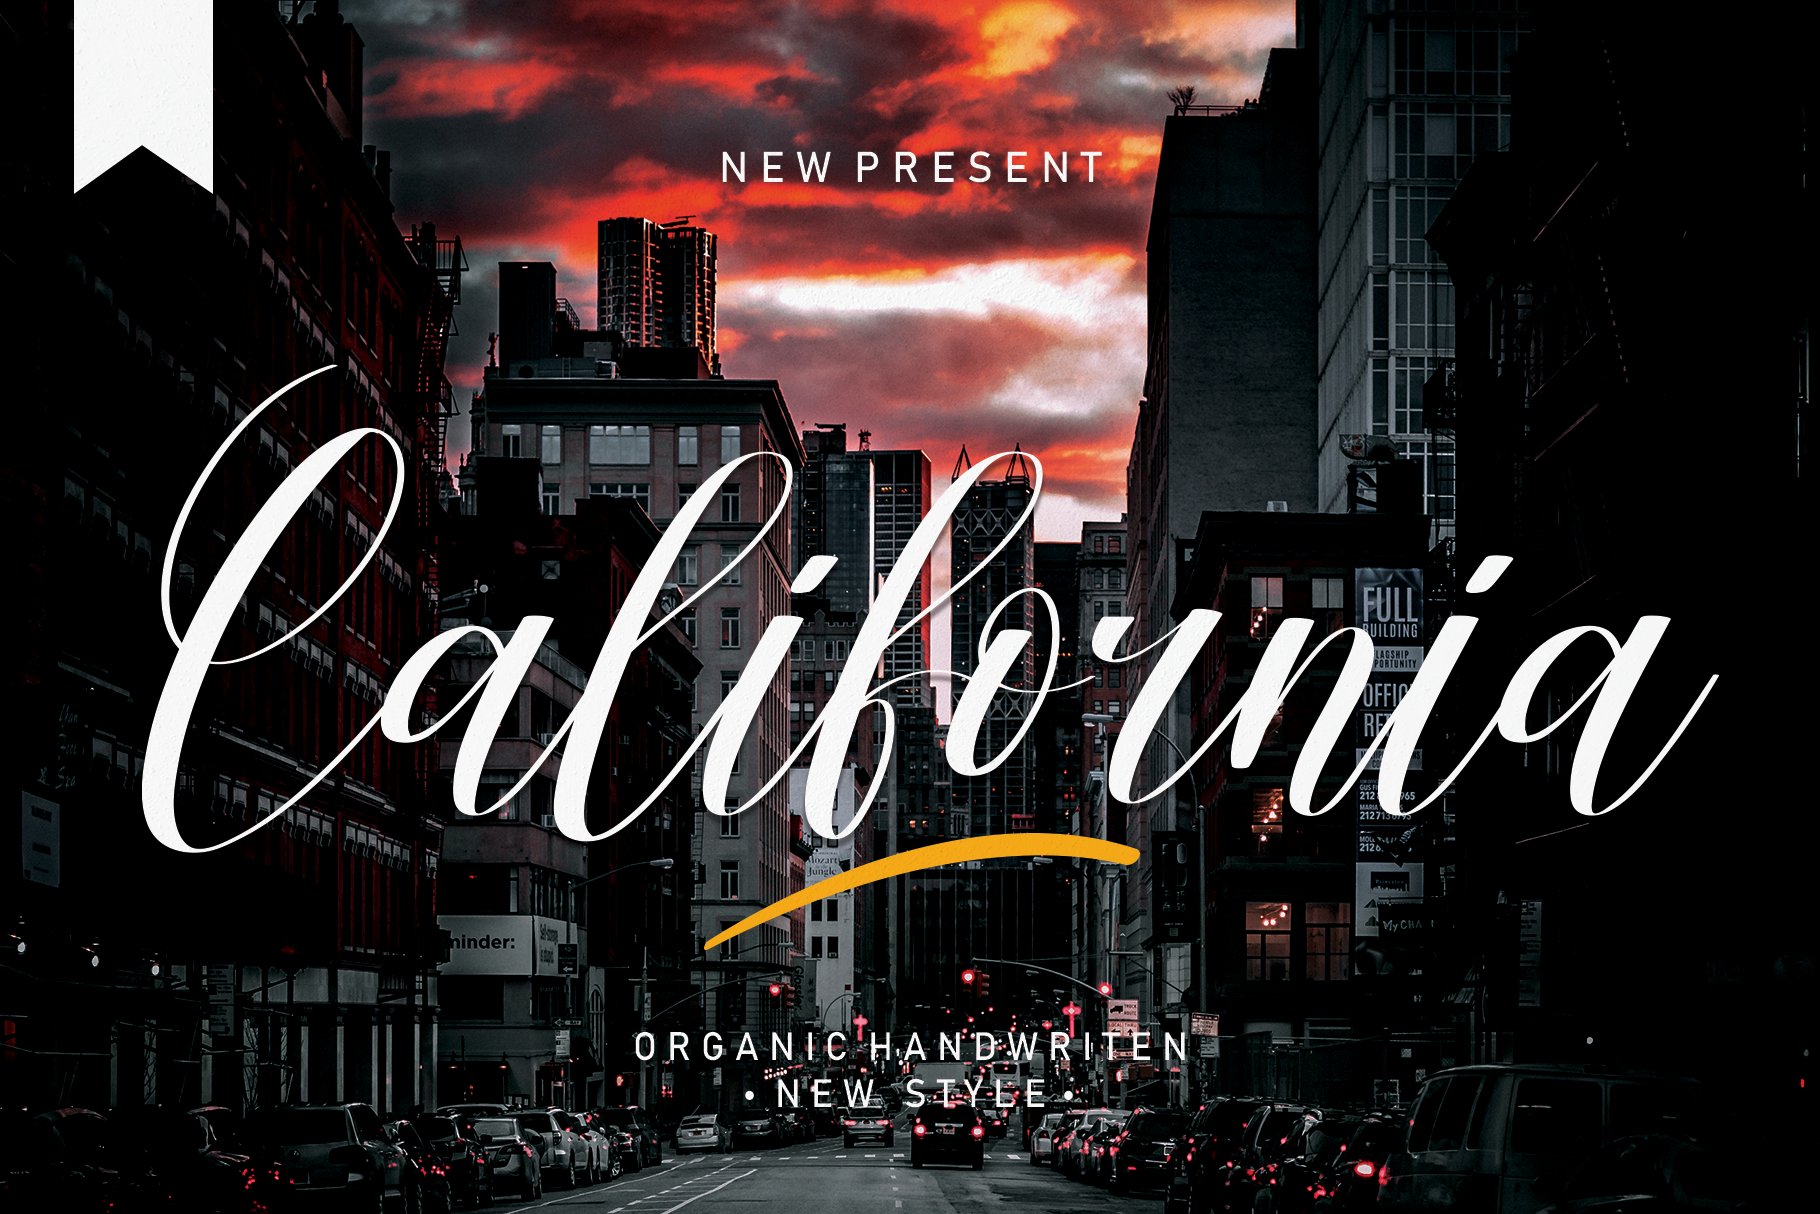 California | Script font cover image.